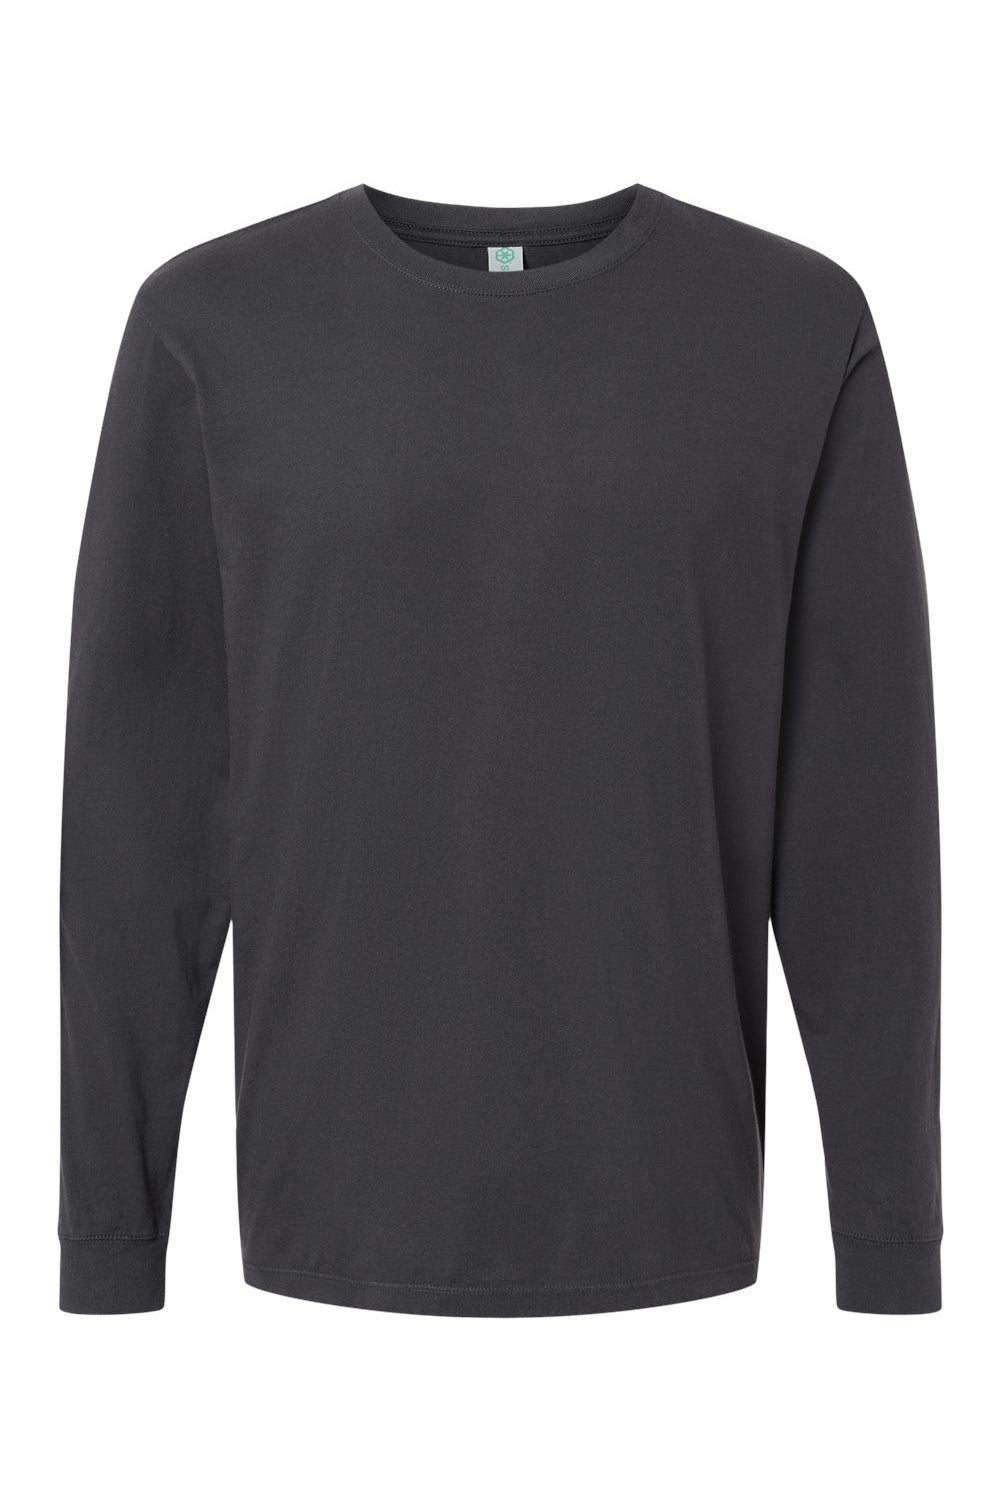 SoftShirts 420 Mens Organic Long Sleeve Crewneck T-Shirt Black Flat Front